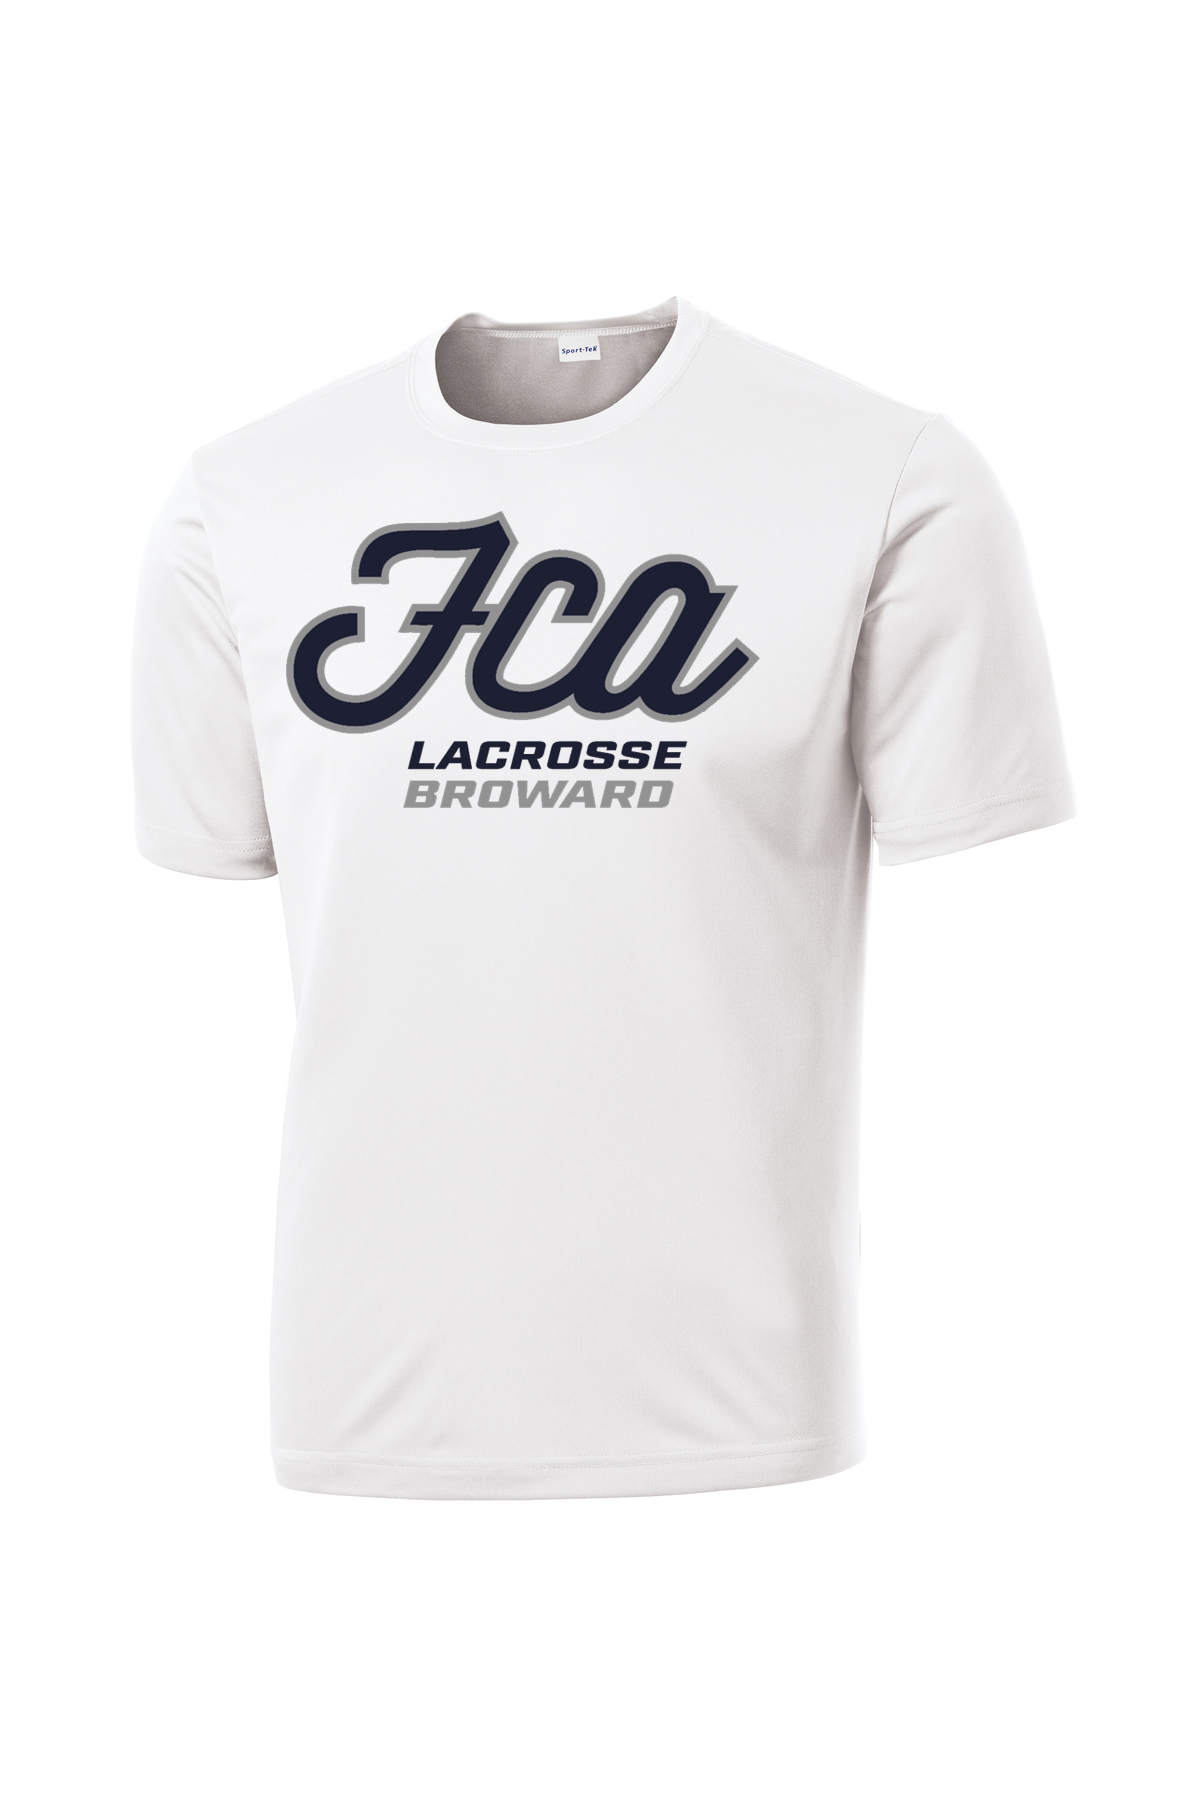 FCA Lacrosse Performance T-Shirt